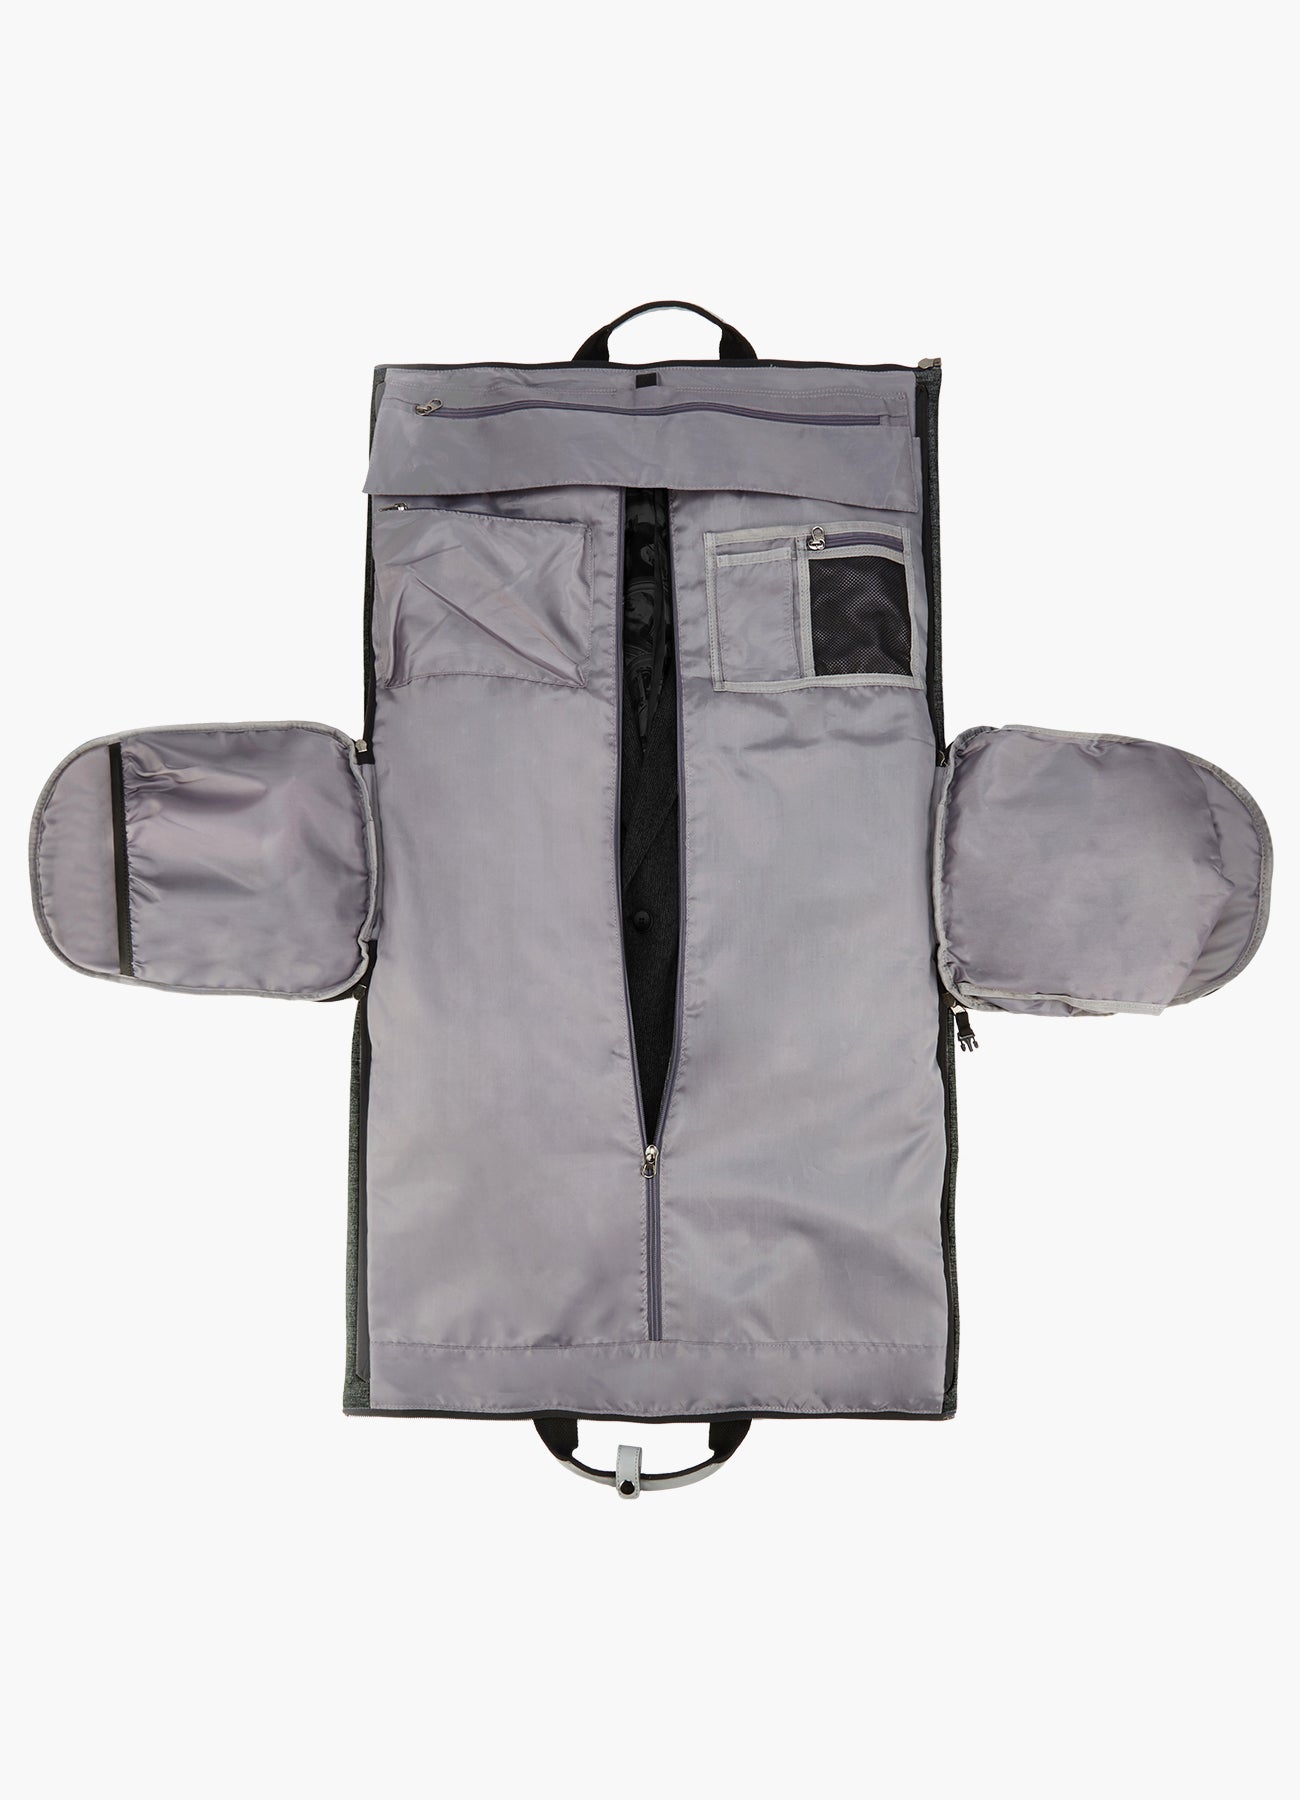 Modoker Garment/Duffel Bag - household items - by owner - housewares sale -  craigslist